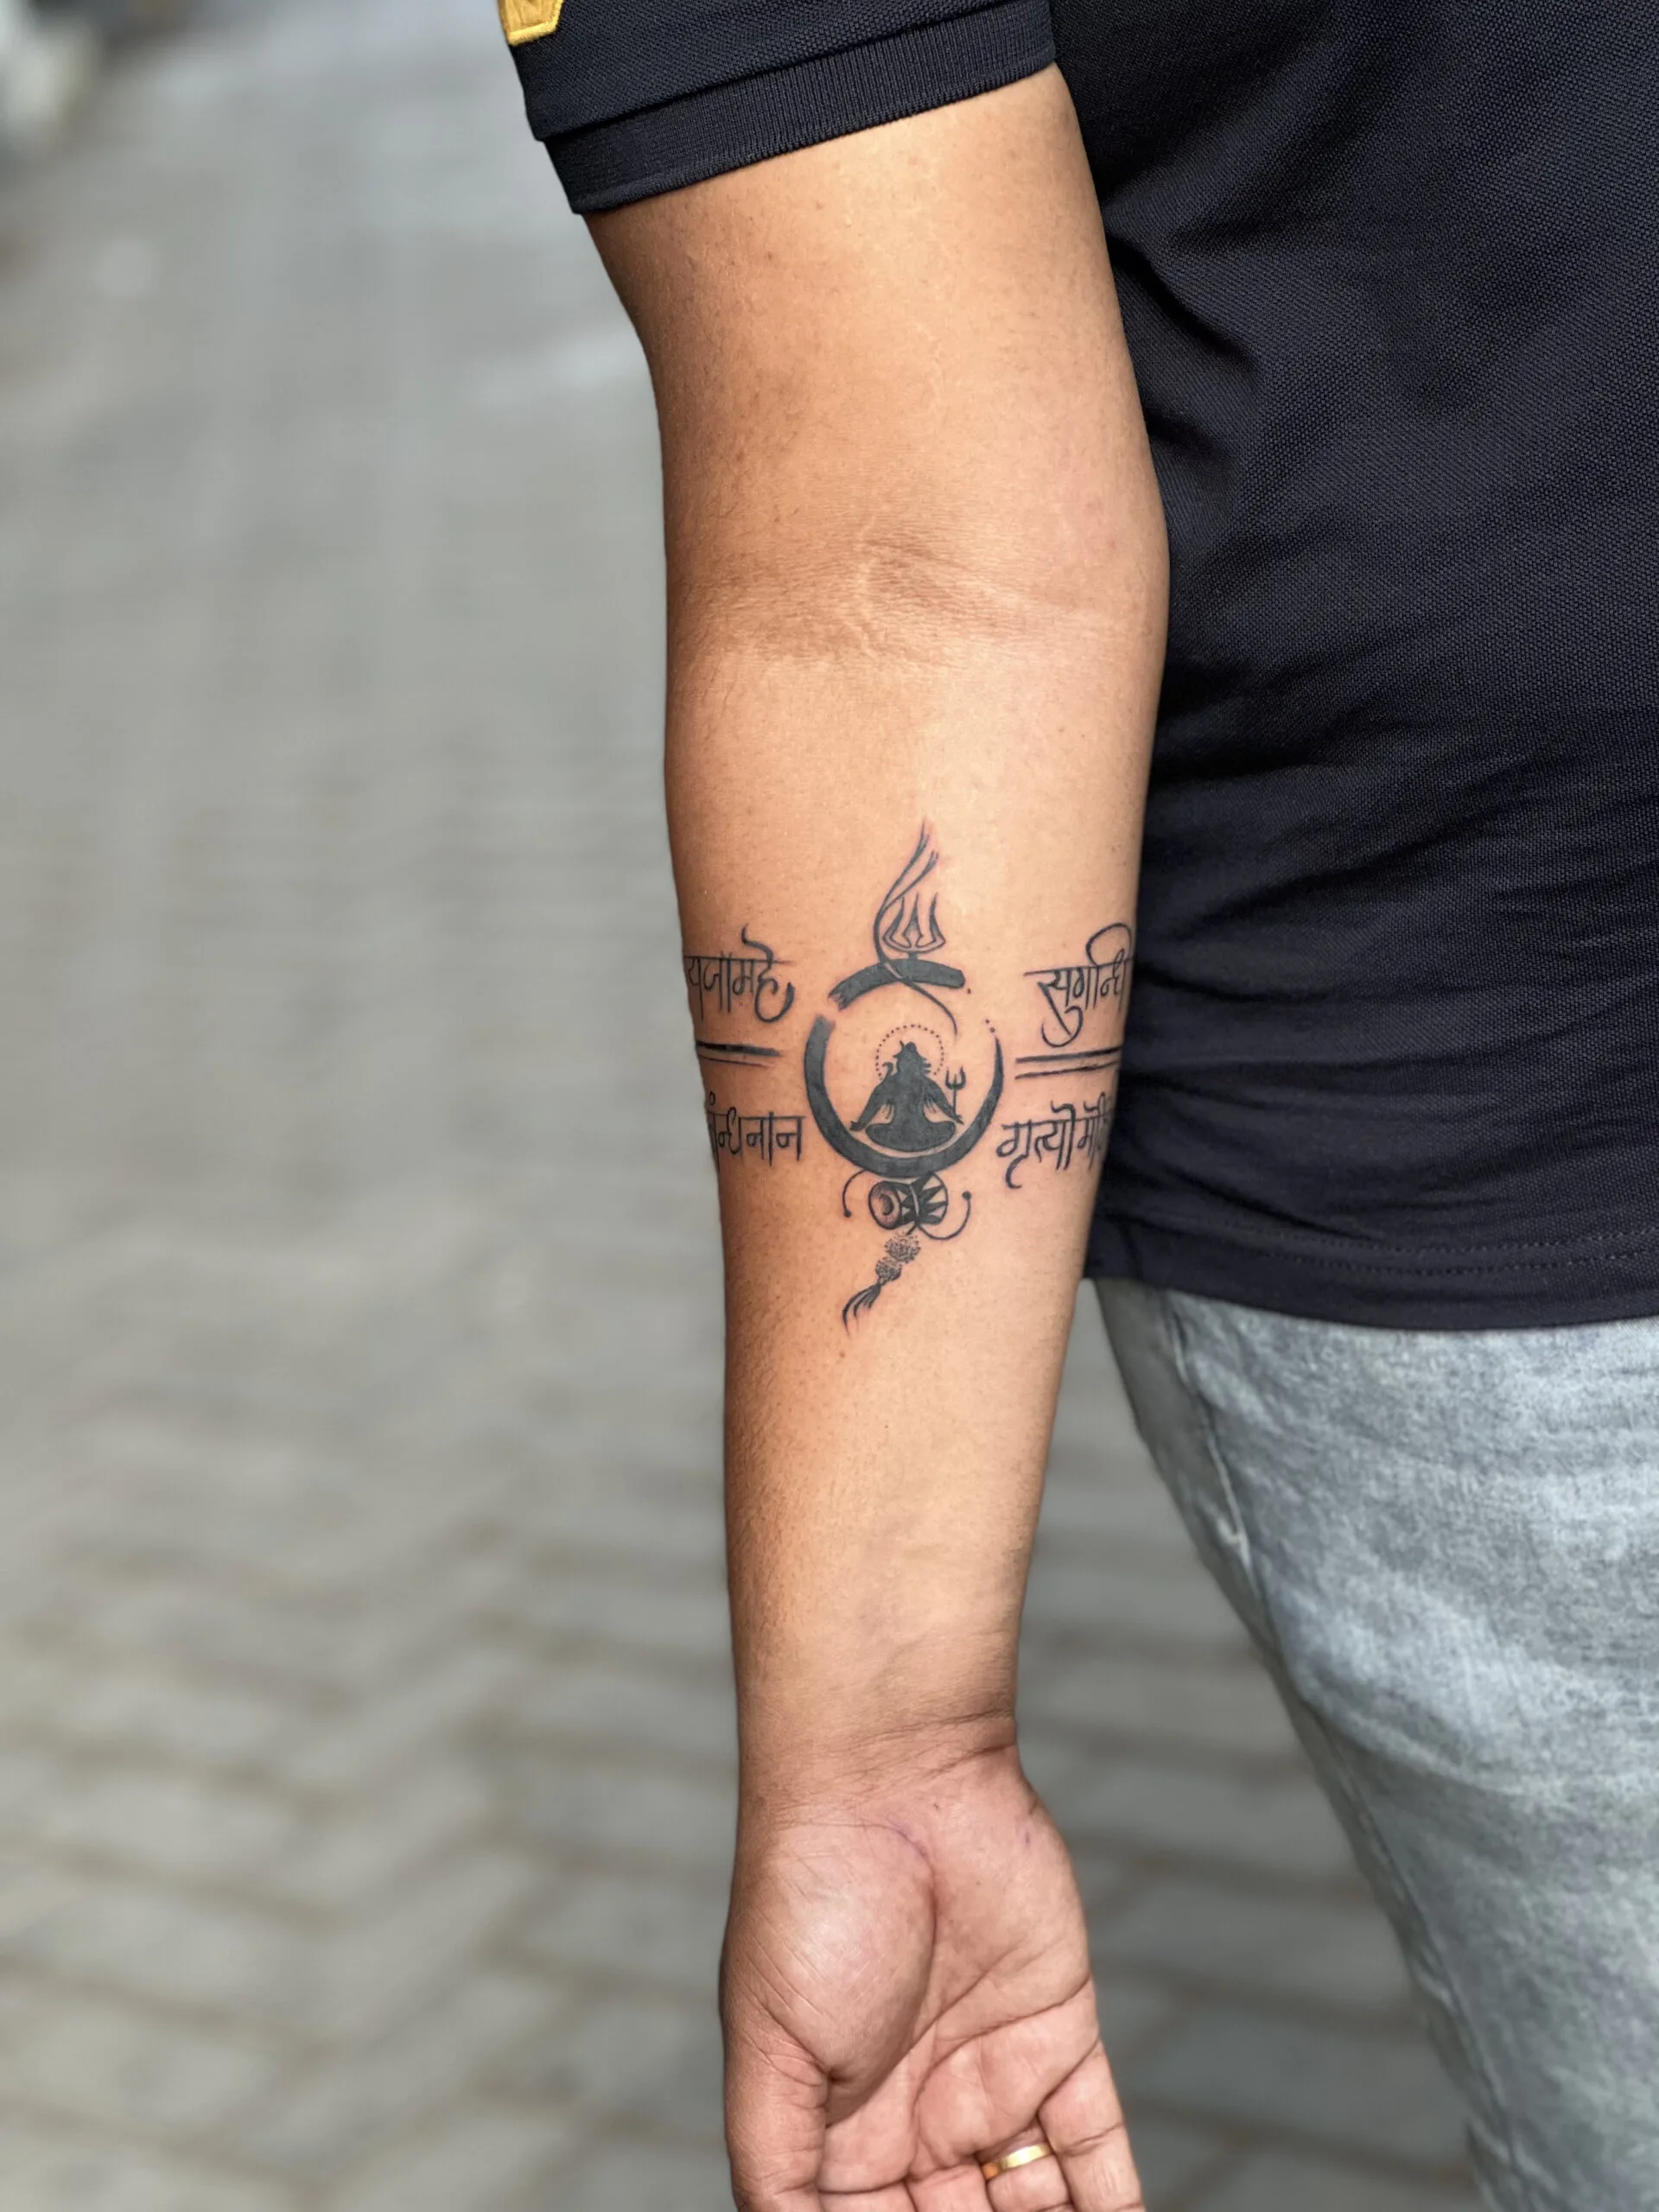 Ordershock Mahadev Trinetra Eye Shiva Tattoo Temporary Body Tattoo  Price  in India Buy Ordershock Mahadev Trinetra Eye Shiva Tattoo Temporary Body  Tattoo Online In India Reviews Ratings  Features  Flipkartcom